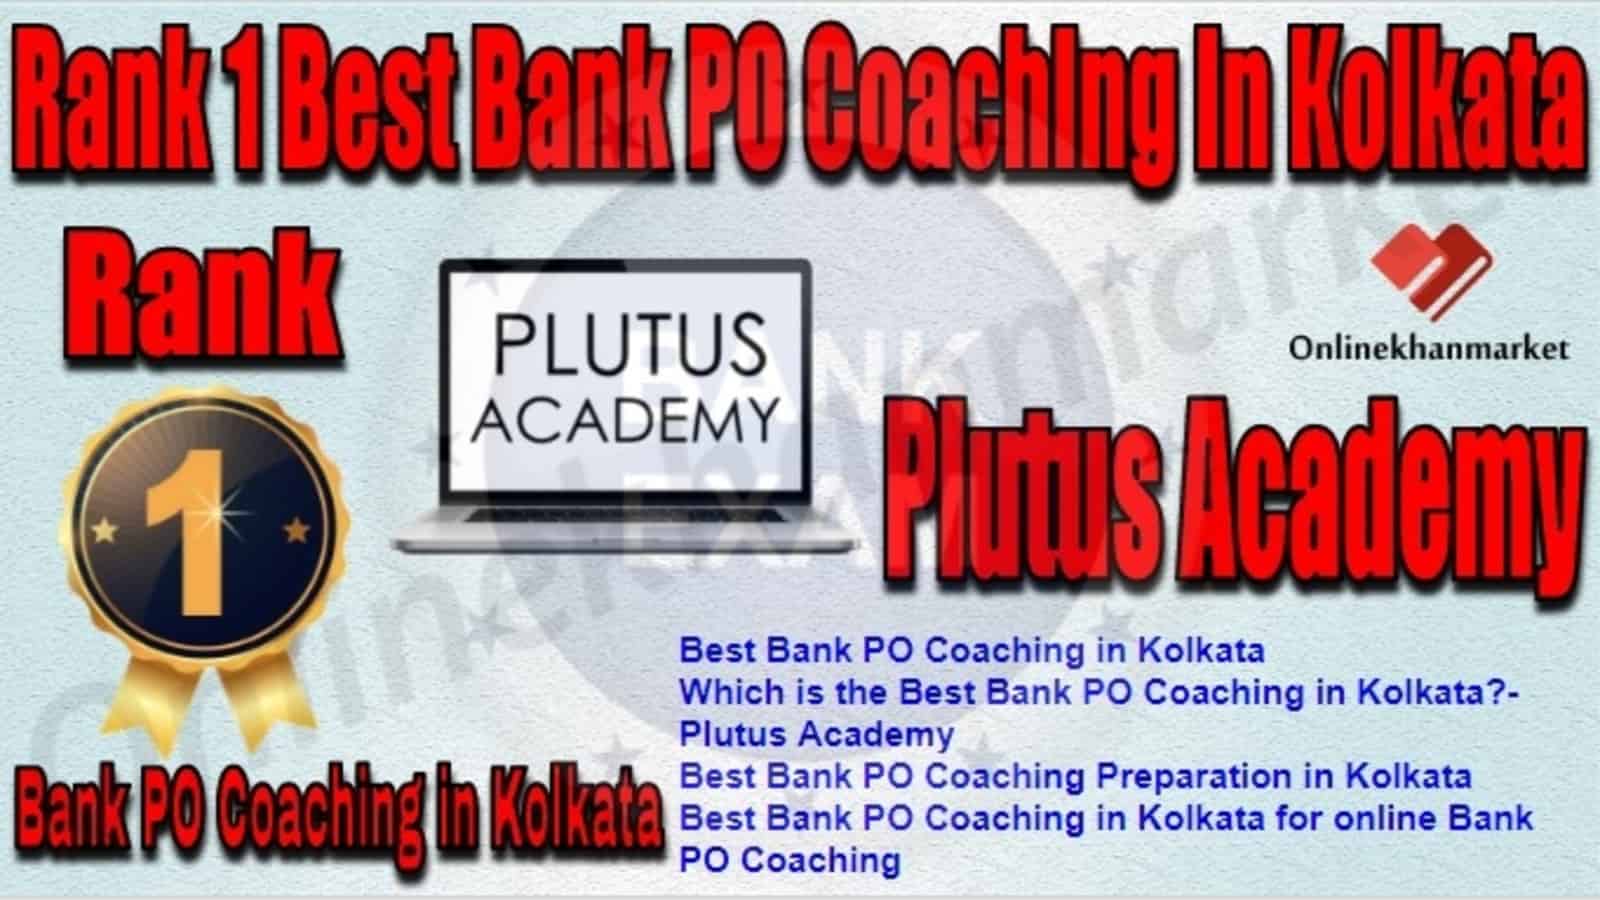 Rank 1 Best Bank PO Coaching in Kolkata